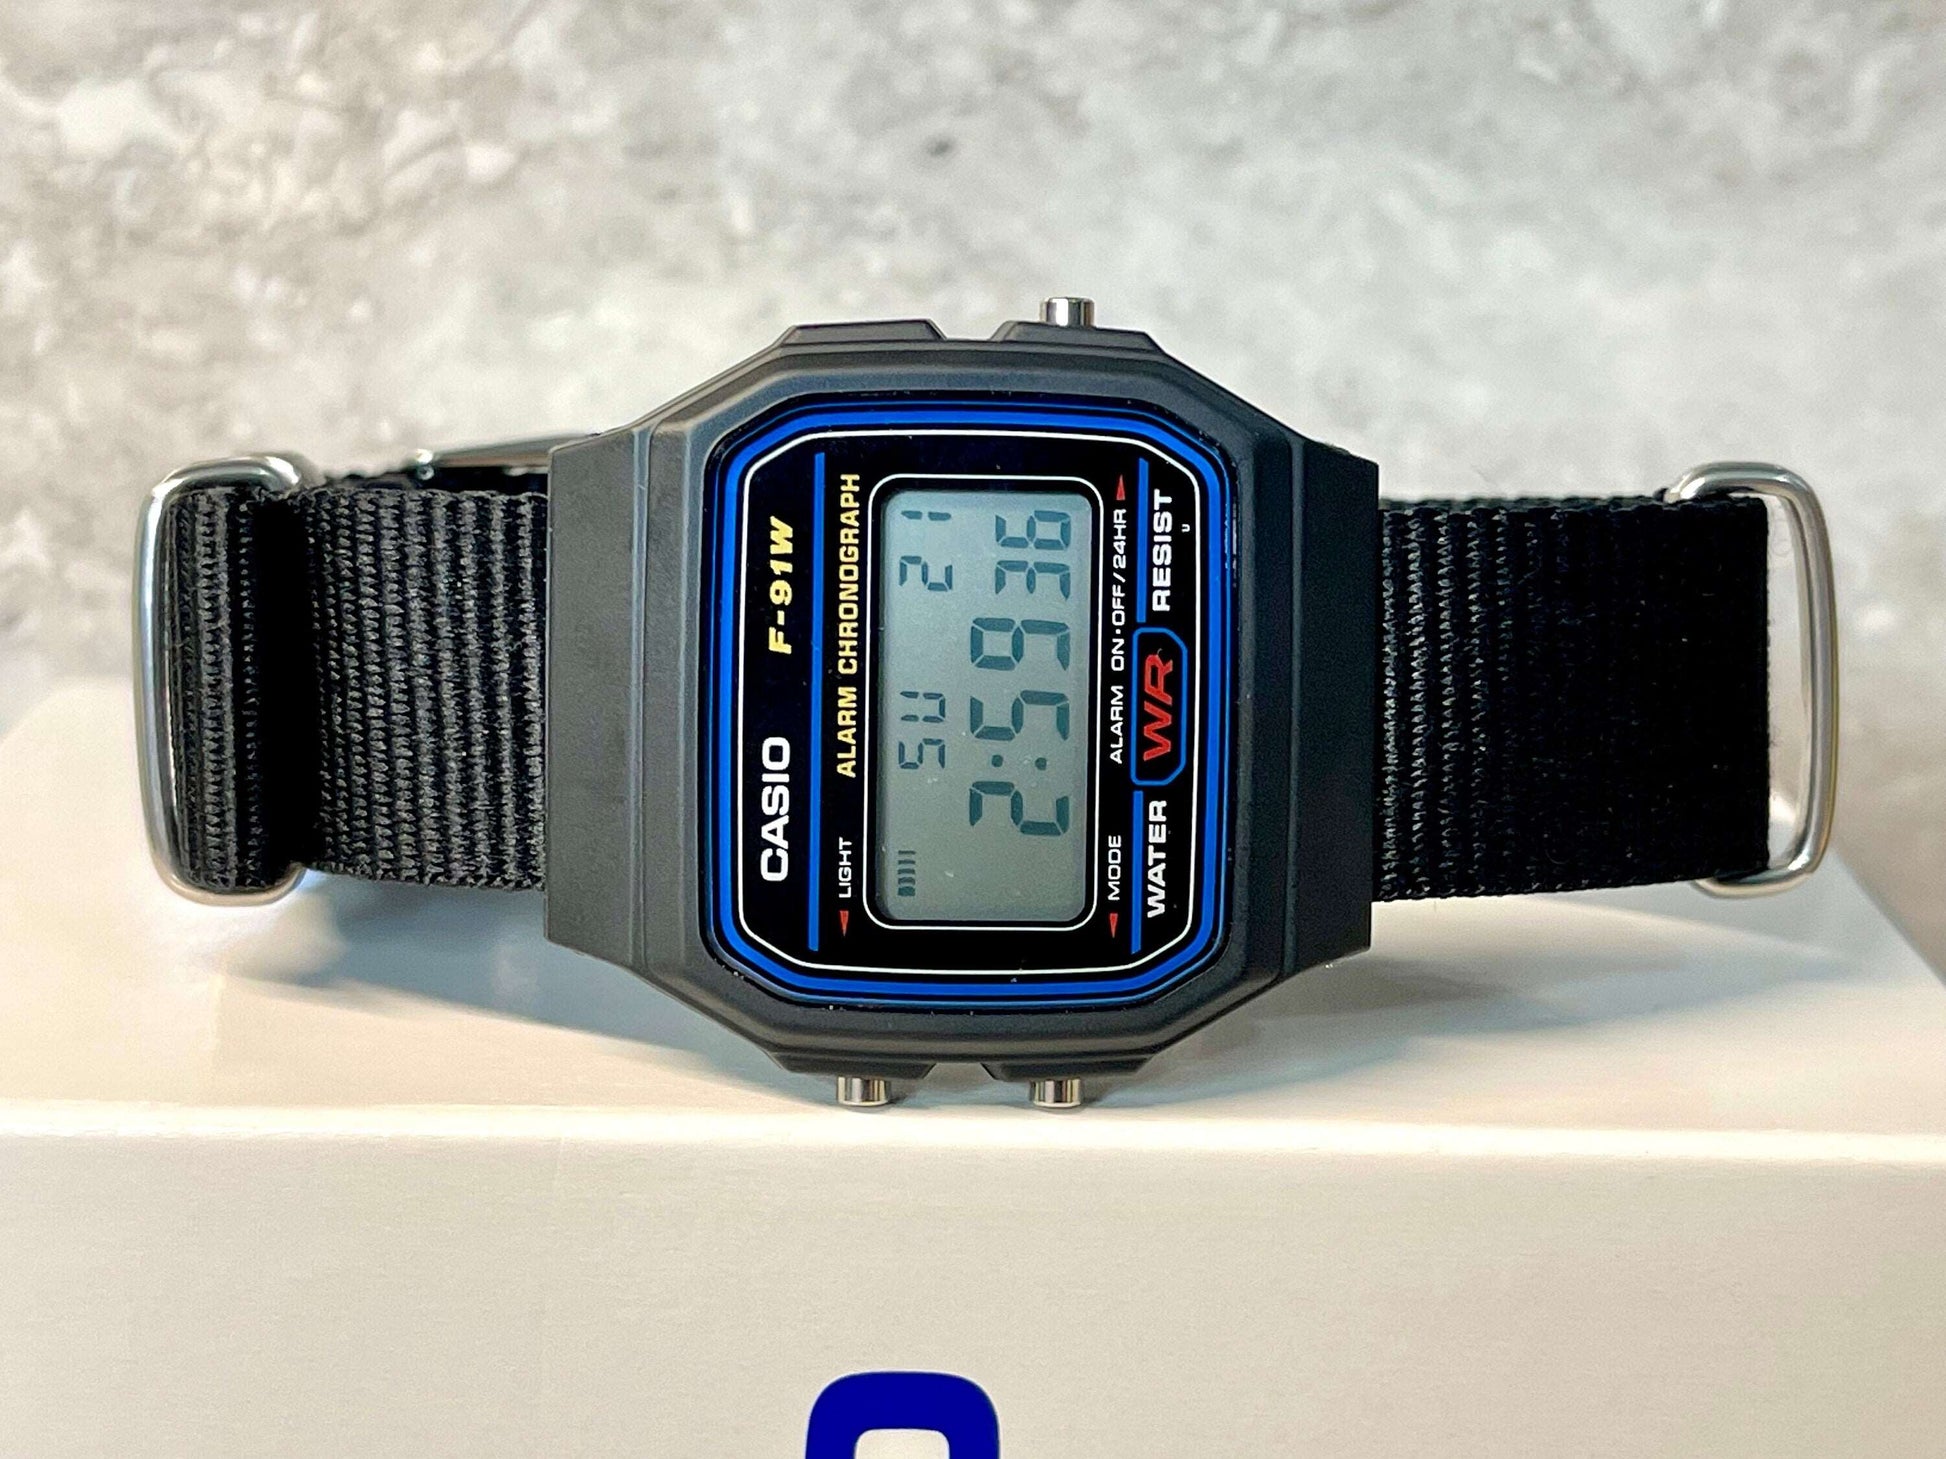 Custom Black Casio Watch on Black Strap w/ silver hardware